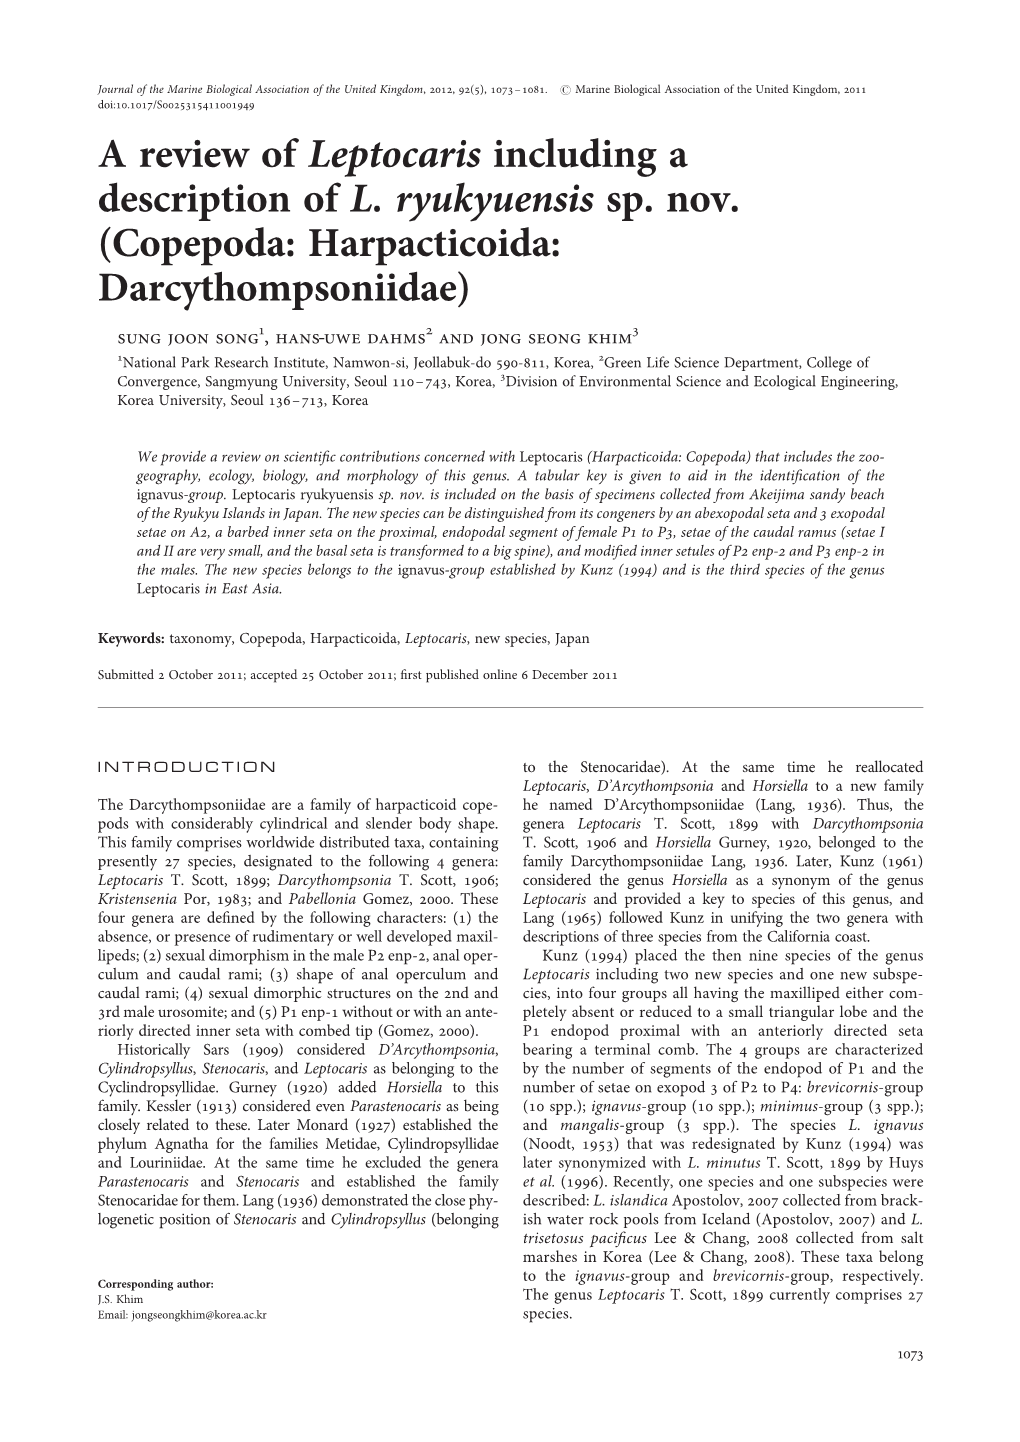 Copepoda: Harpacticoida: Darcythompsoniidae